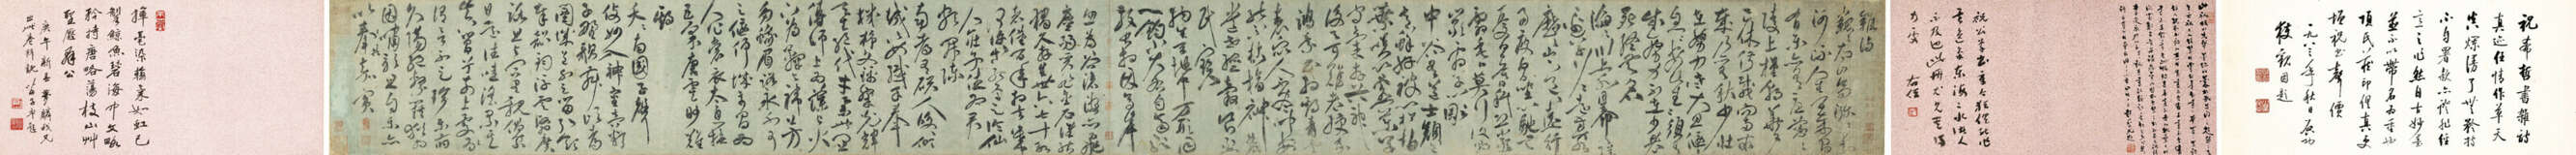 WITH SIGNATURE OF ZHU YUNMING (16TH CENTURY) - photo 2